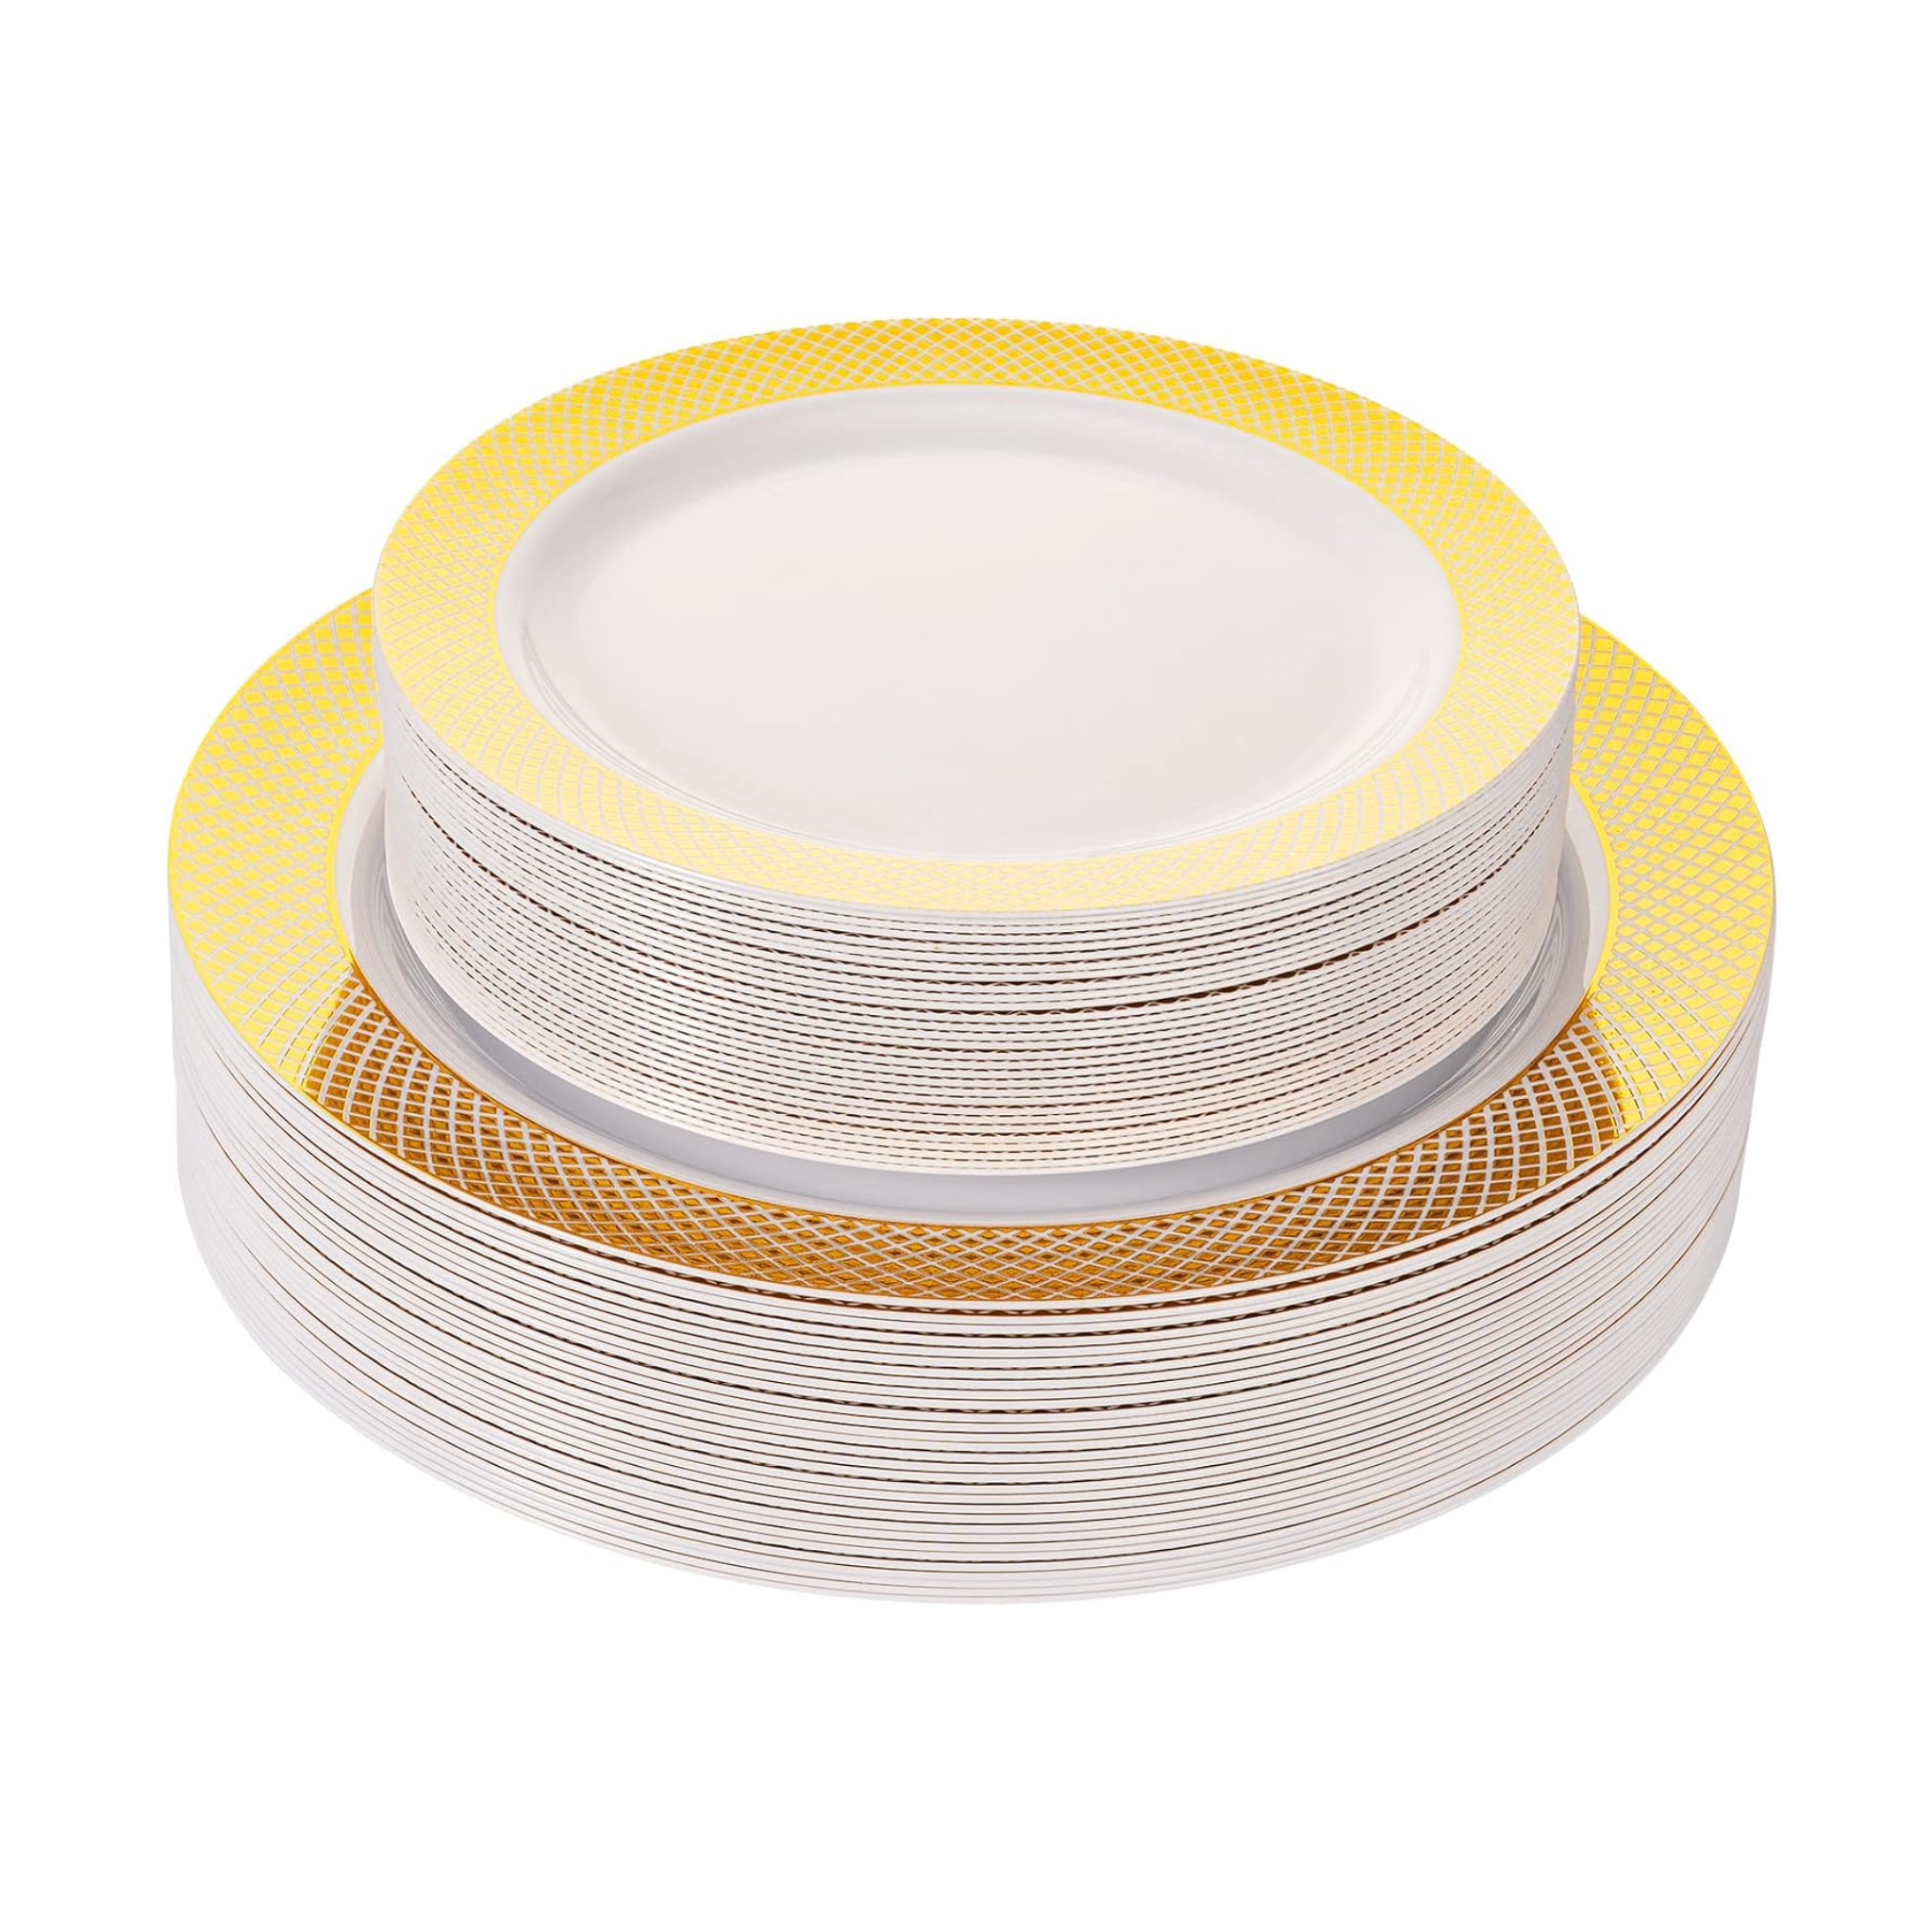 Set of 60 Elegant Plastic Plates Set with Gold Rim